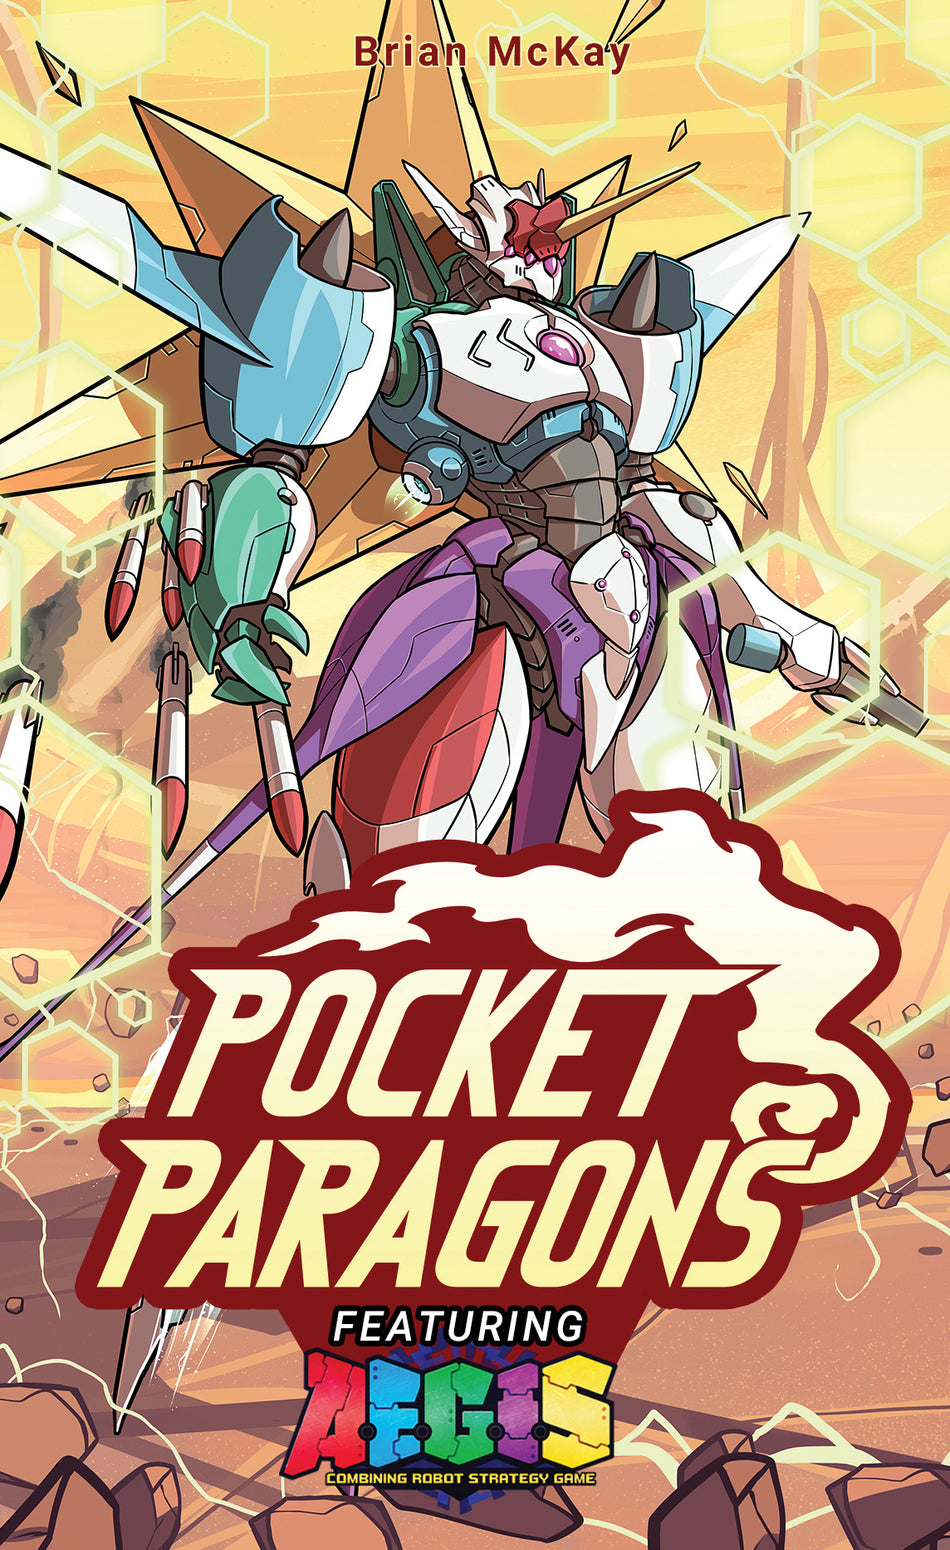 Pocket Paragons: AEGIS